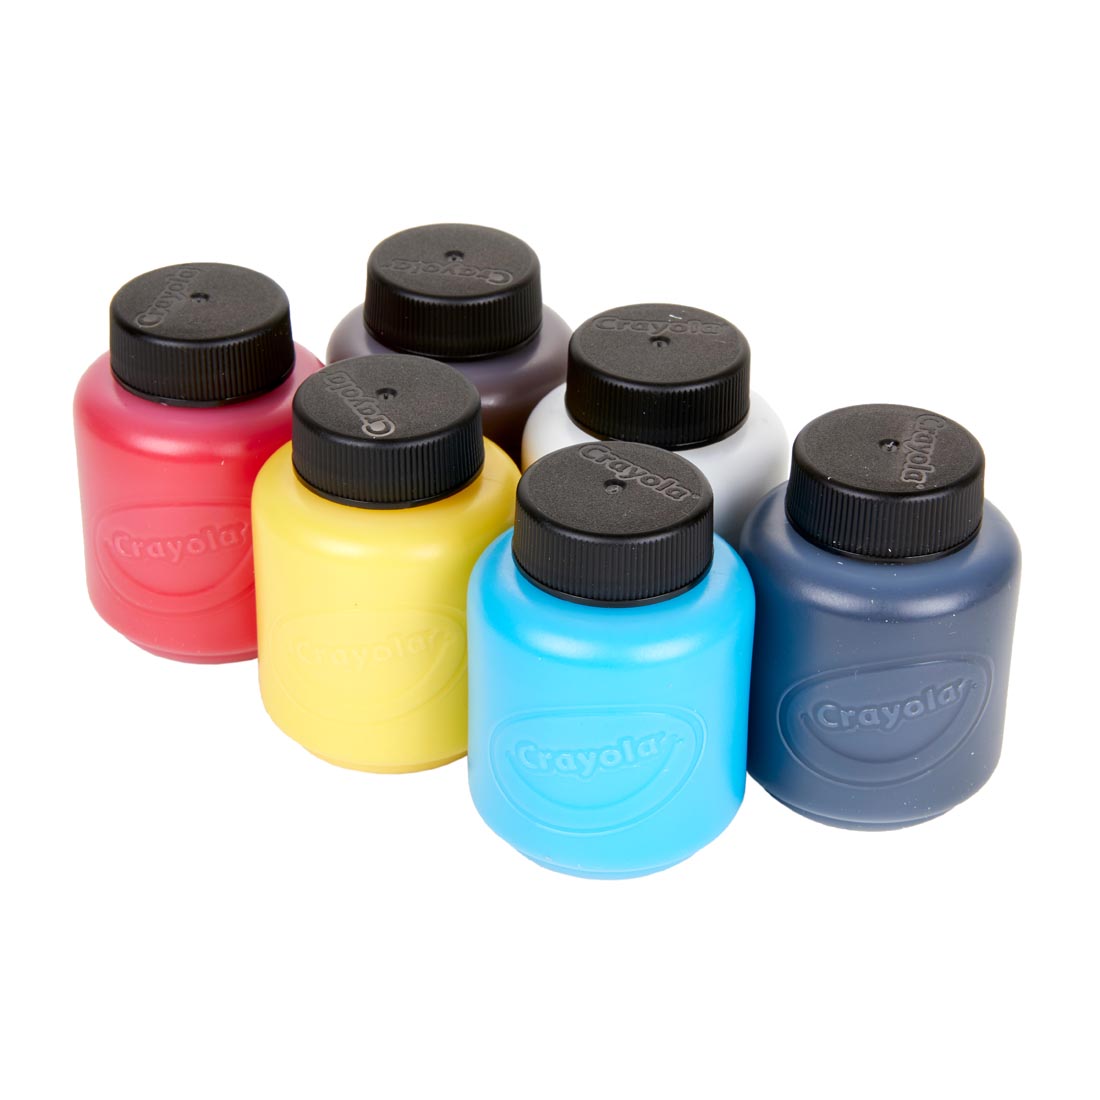 Six bottles from the Crayola Acrylic Paint Set